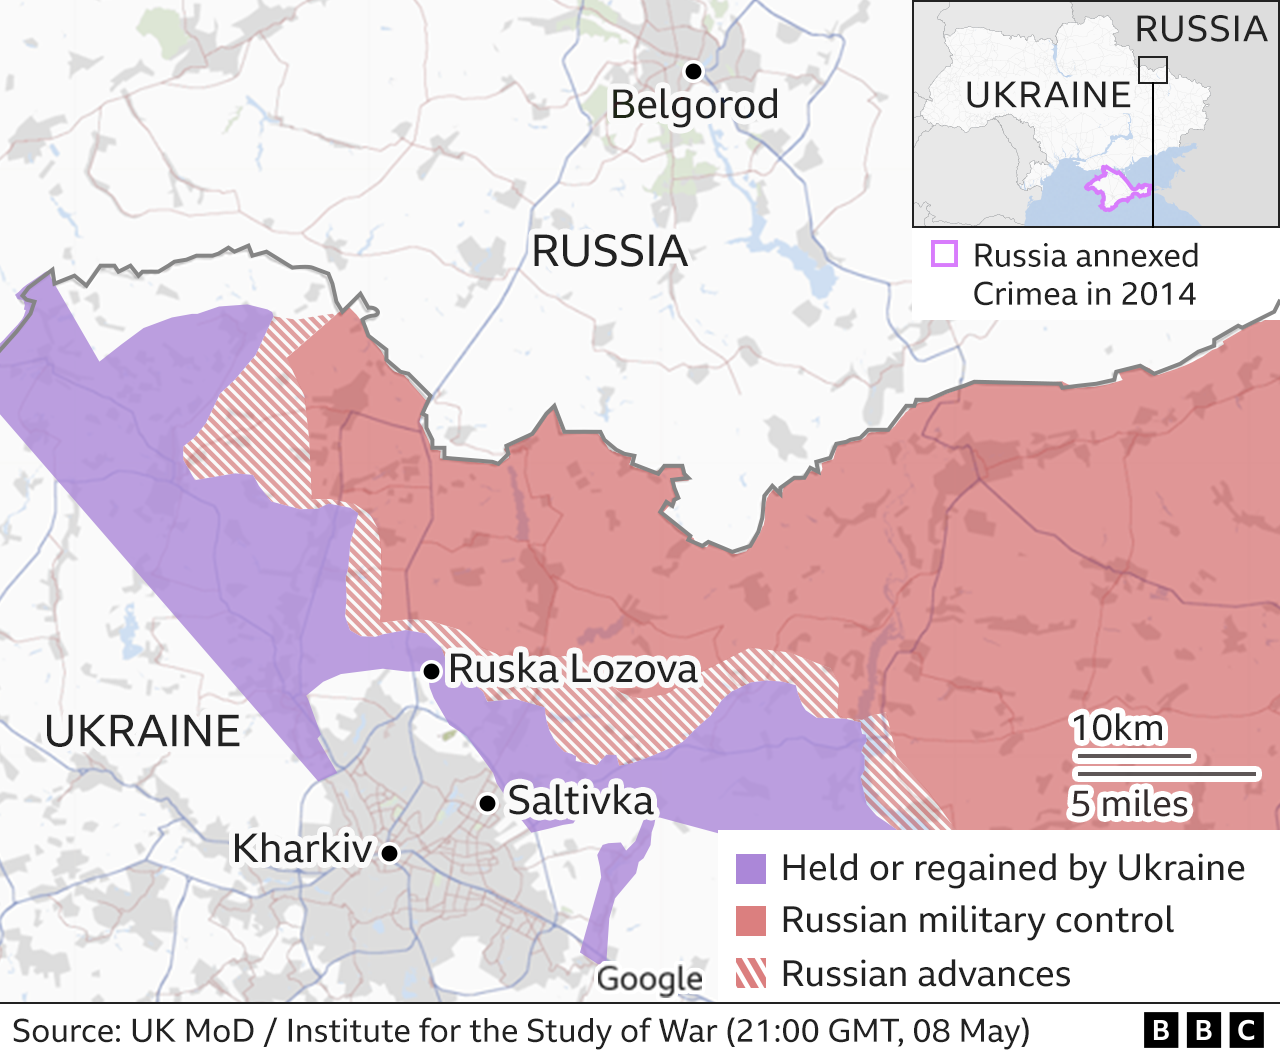 Map of the area around Kharkiv and Belgorod along the Ukrainian/Russian border